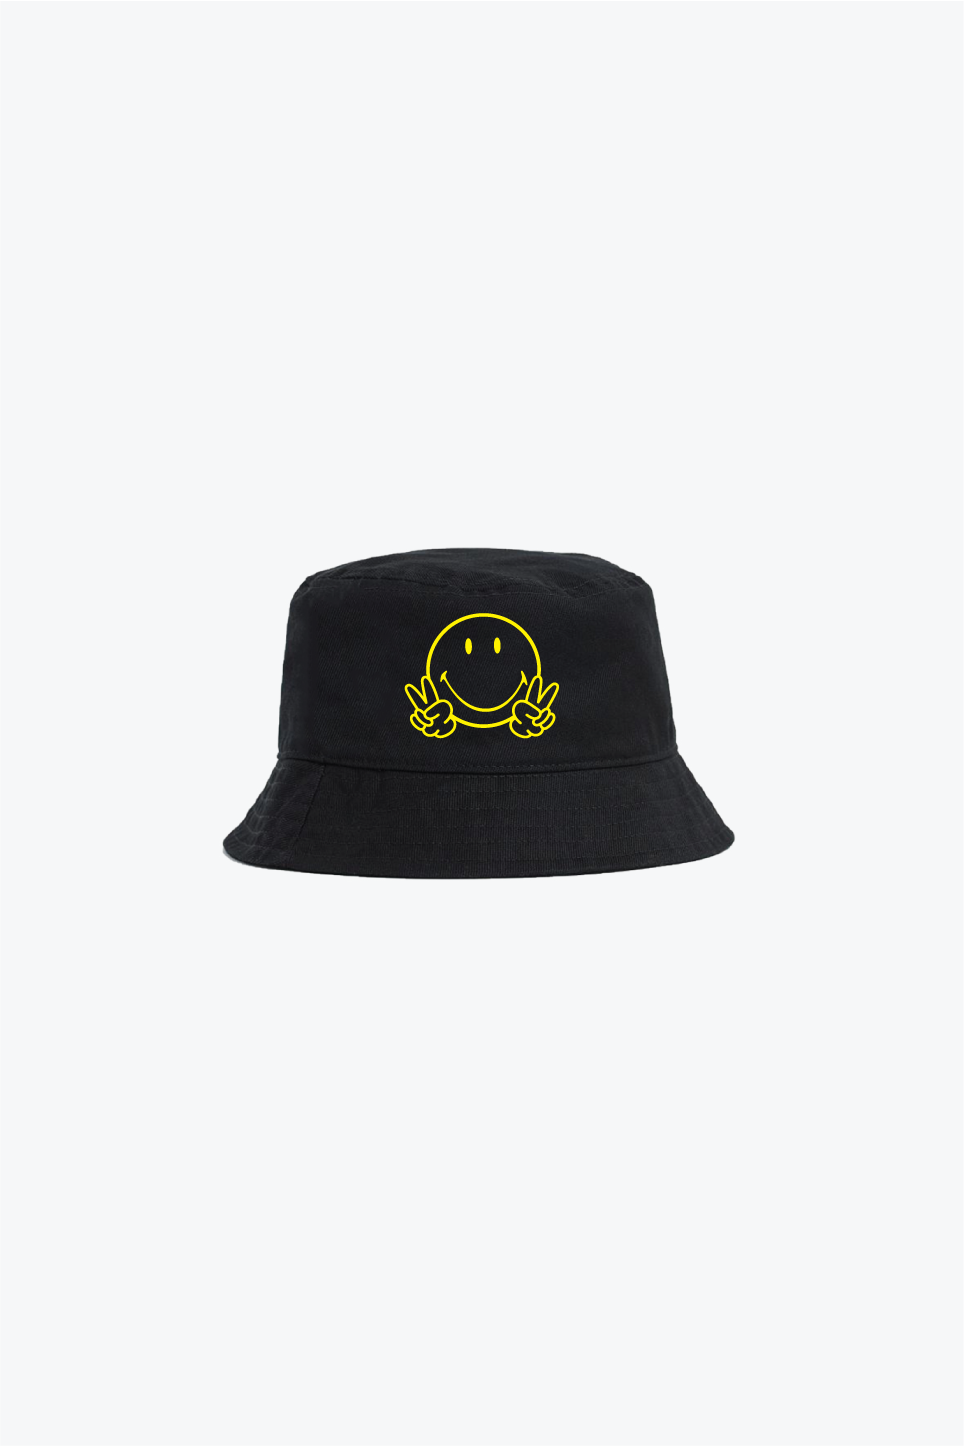 P/C x Smiley Reversible Bucket Hat - Black/Ivory